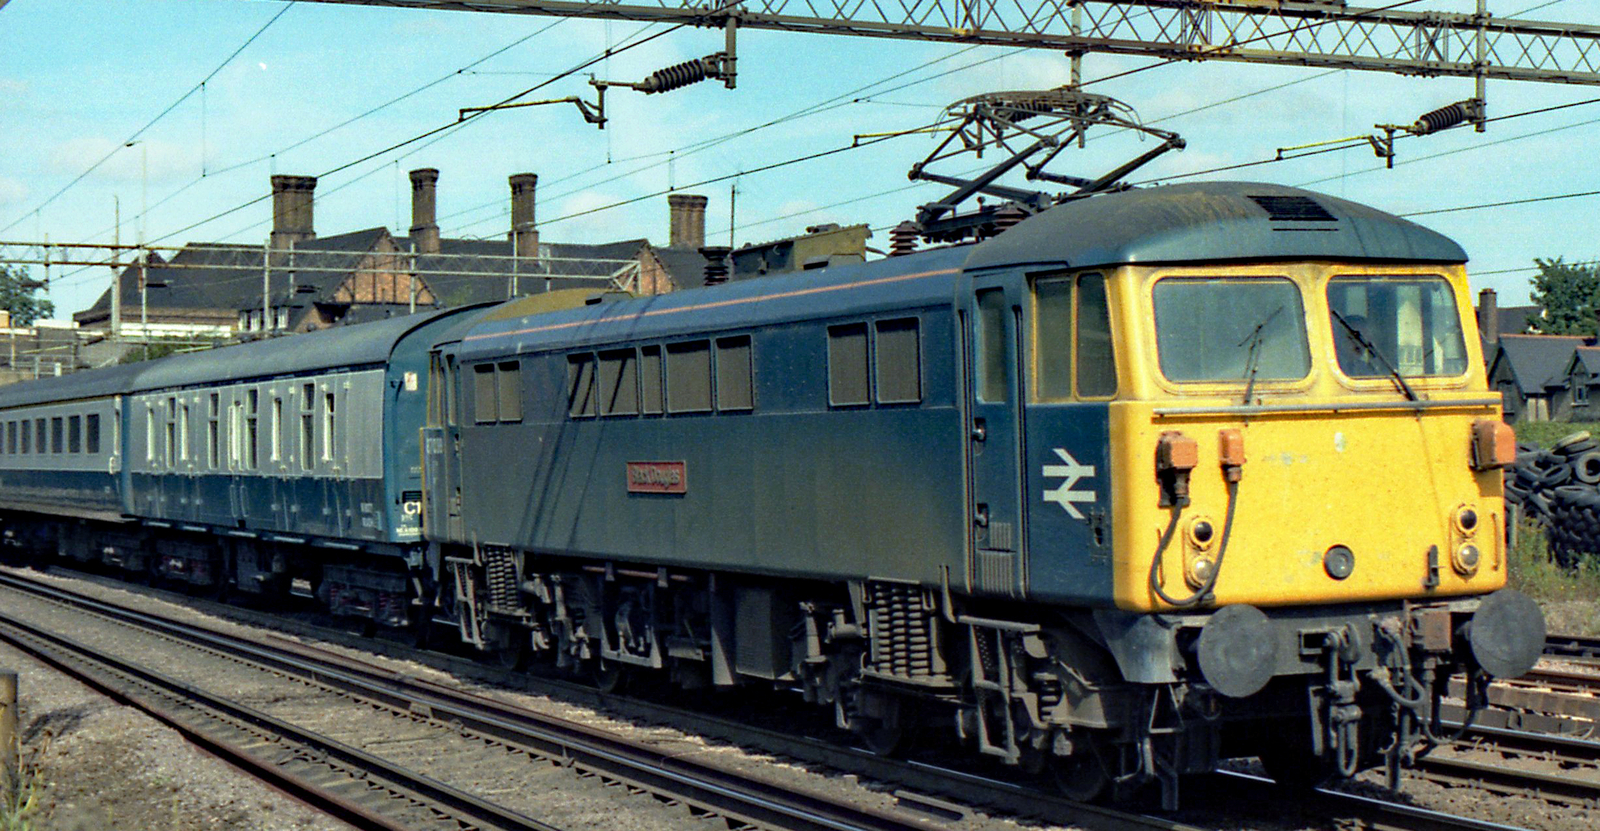 87030 “Black Douglas” in Kenton in September 1979 en route to London Euston